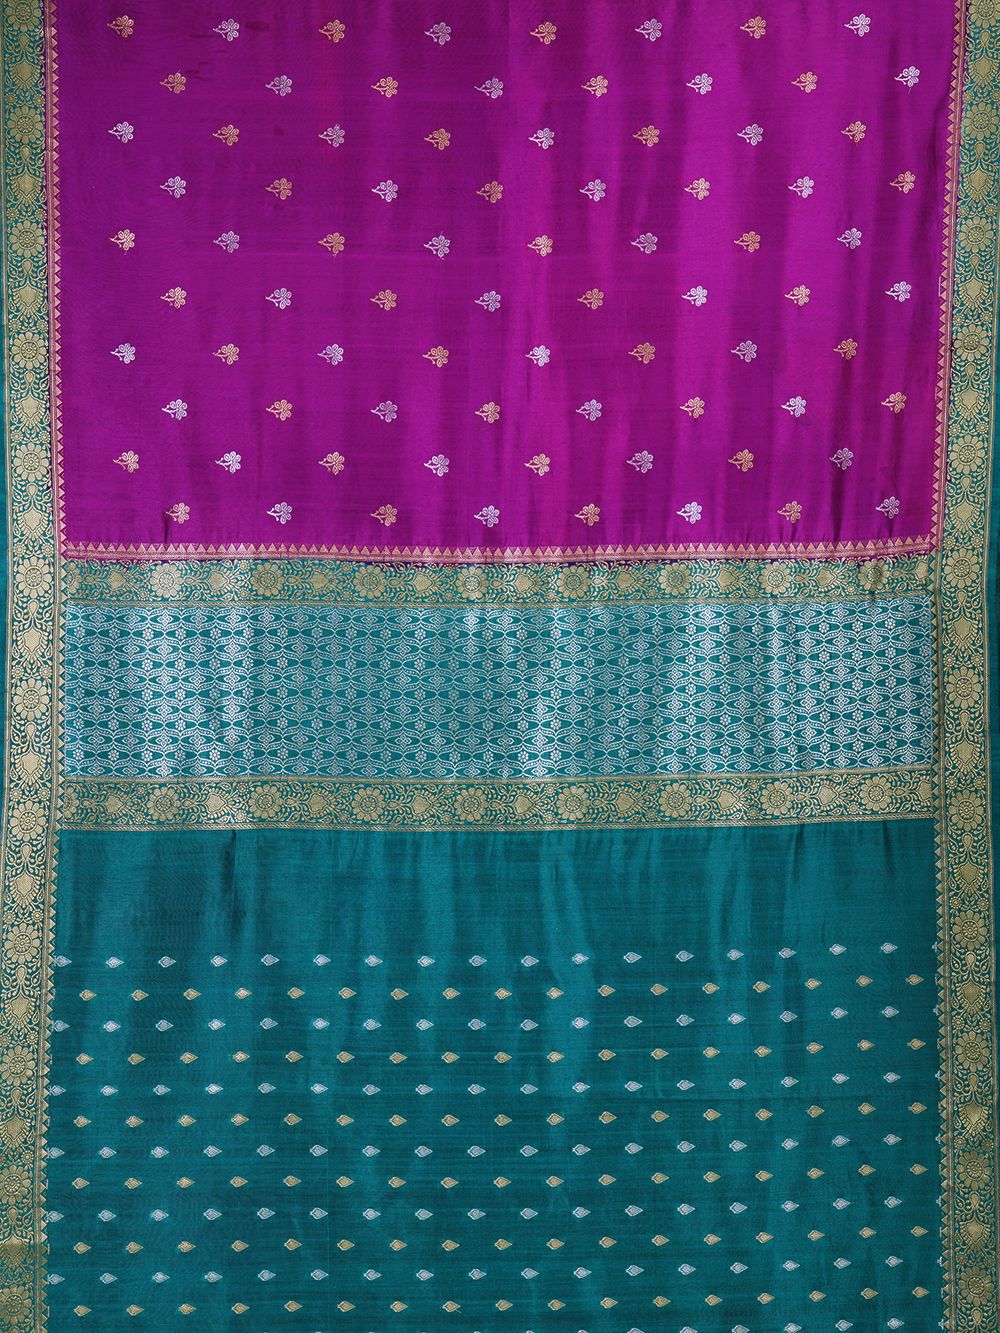 Purple Handwoven Banarasi  Silk Saree